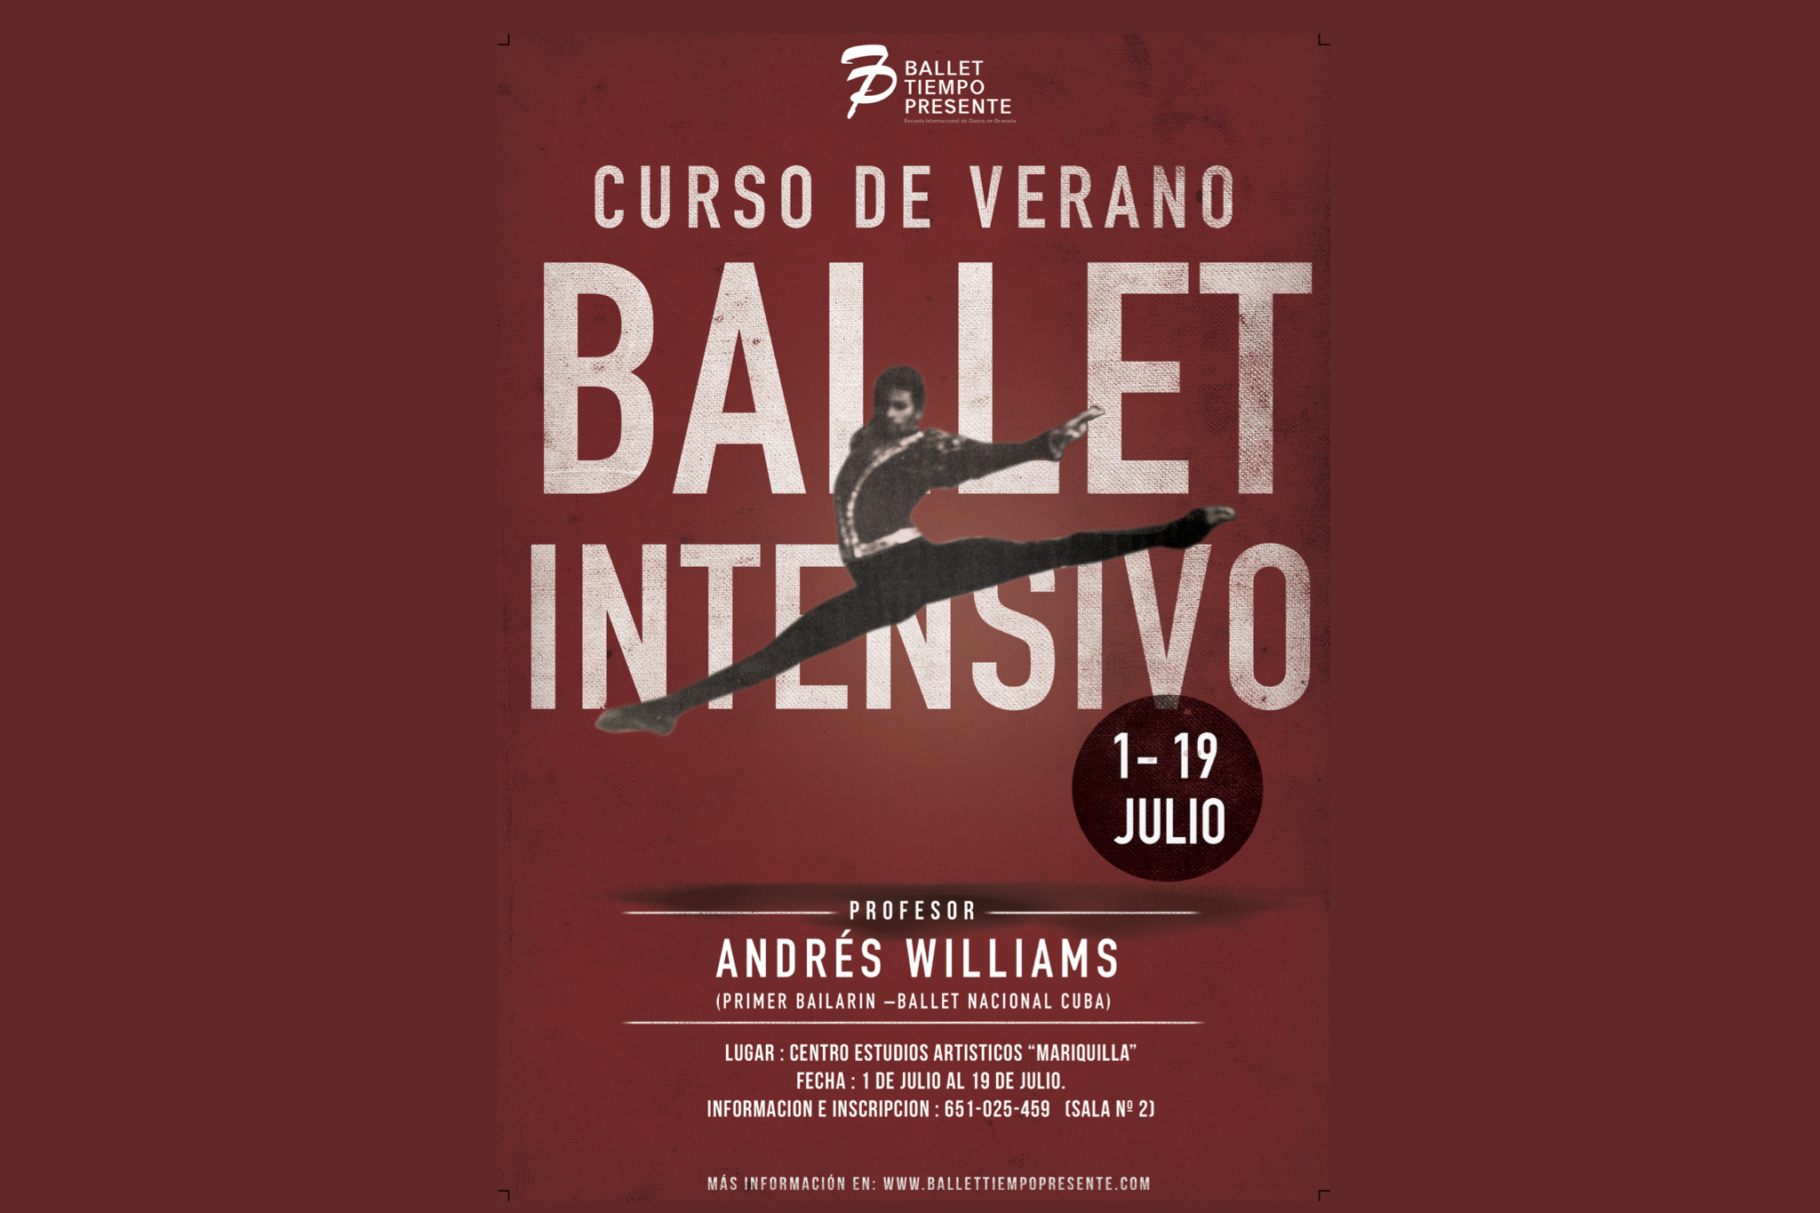 Curso intensivo de Ballet impartido por Andrés Williams